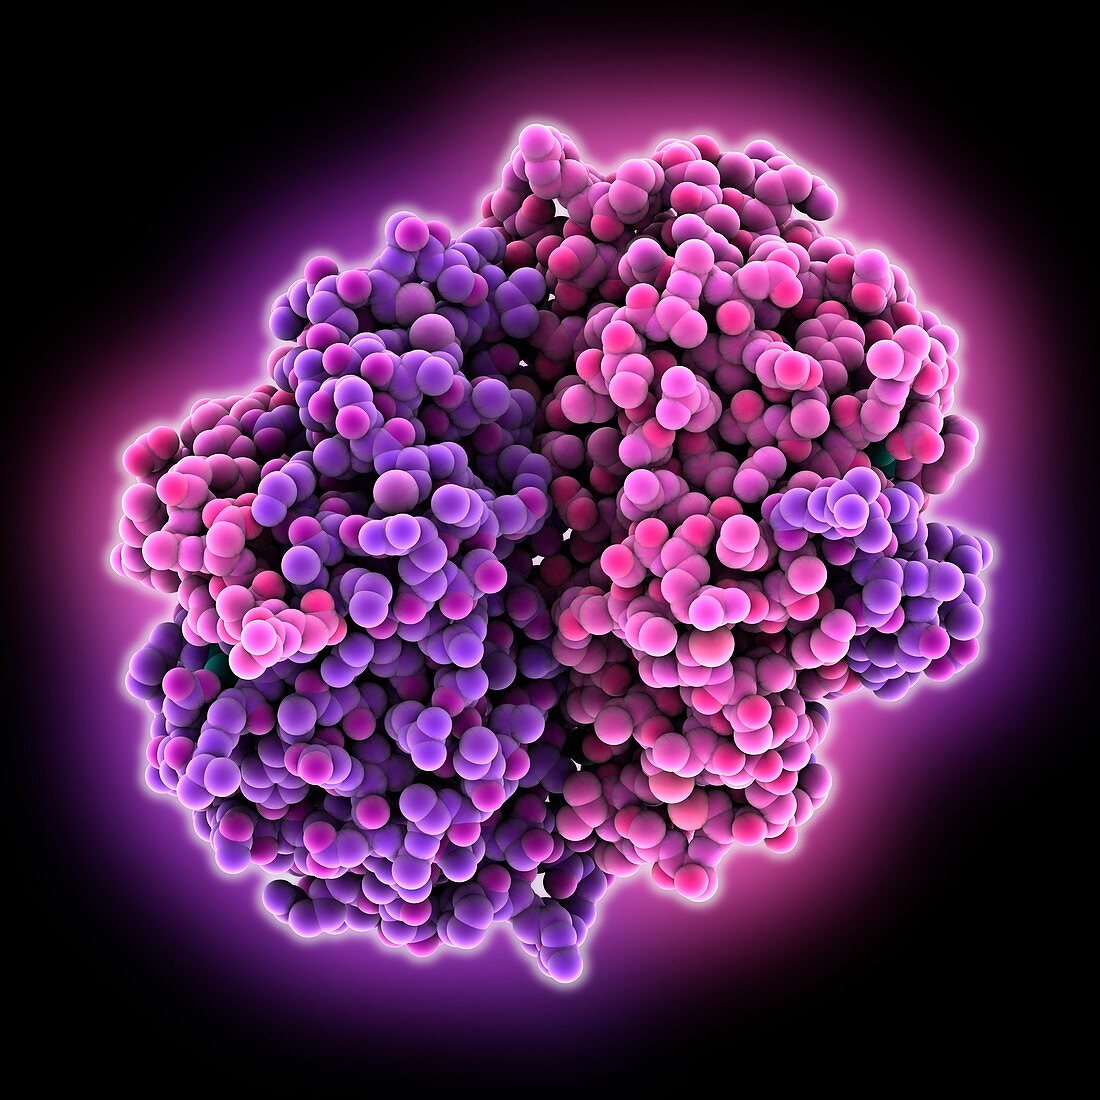 Herpes simplex virus ICP27 protein